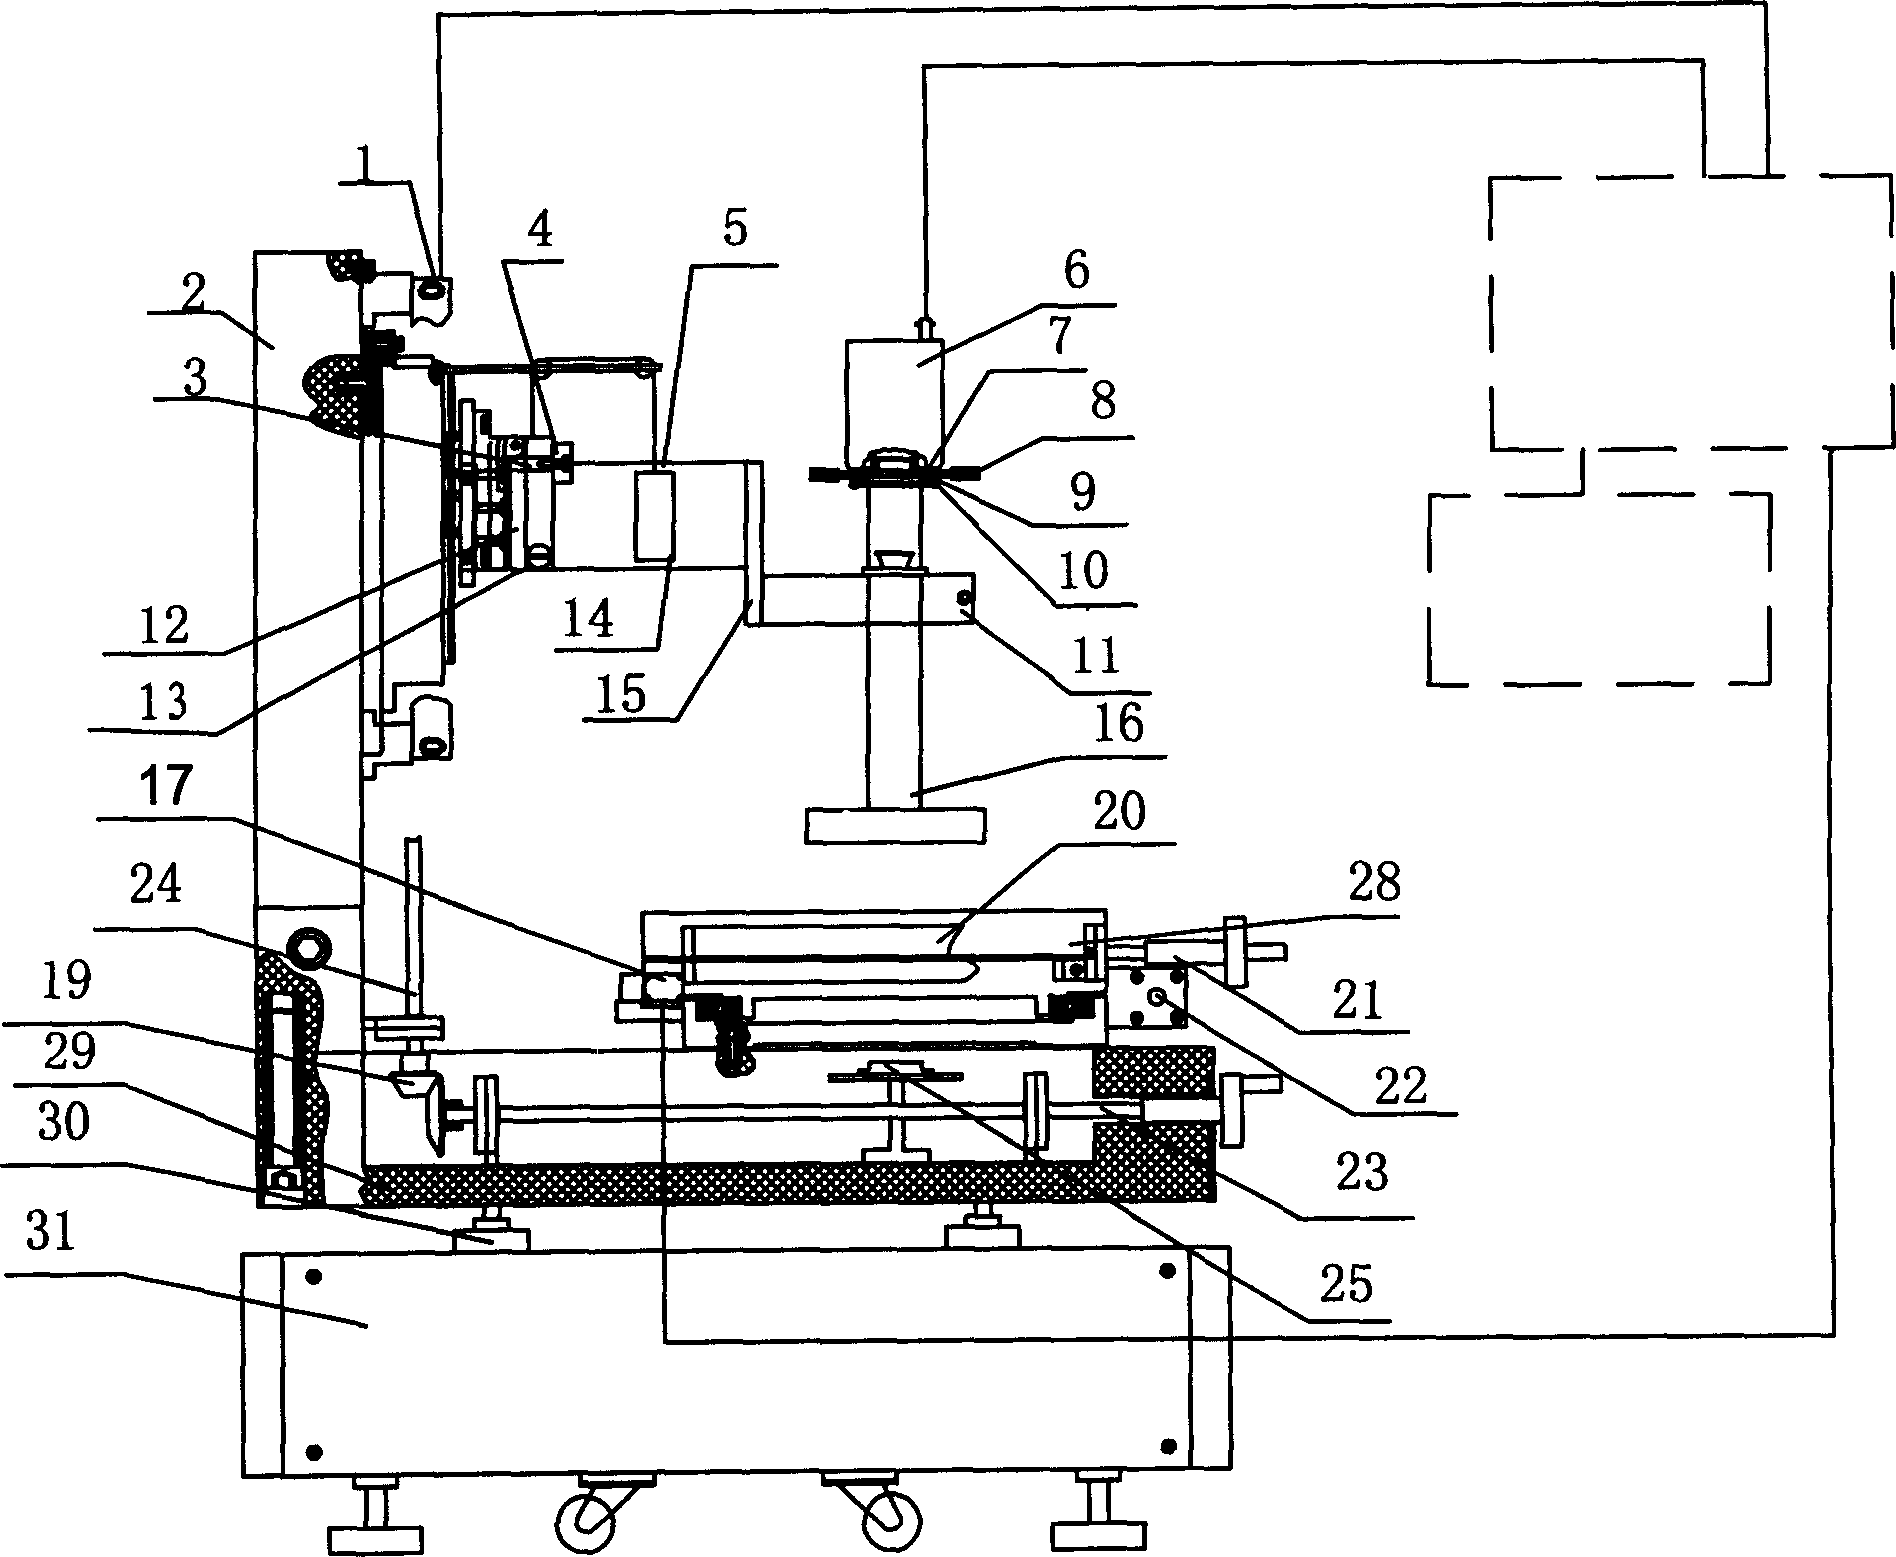 Manual image measuring instrument